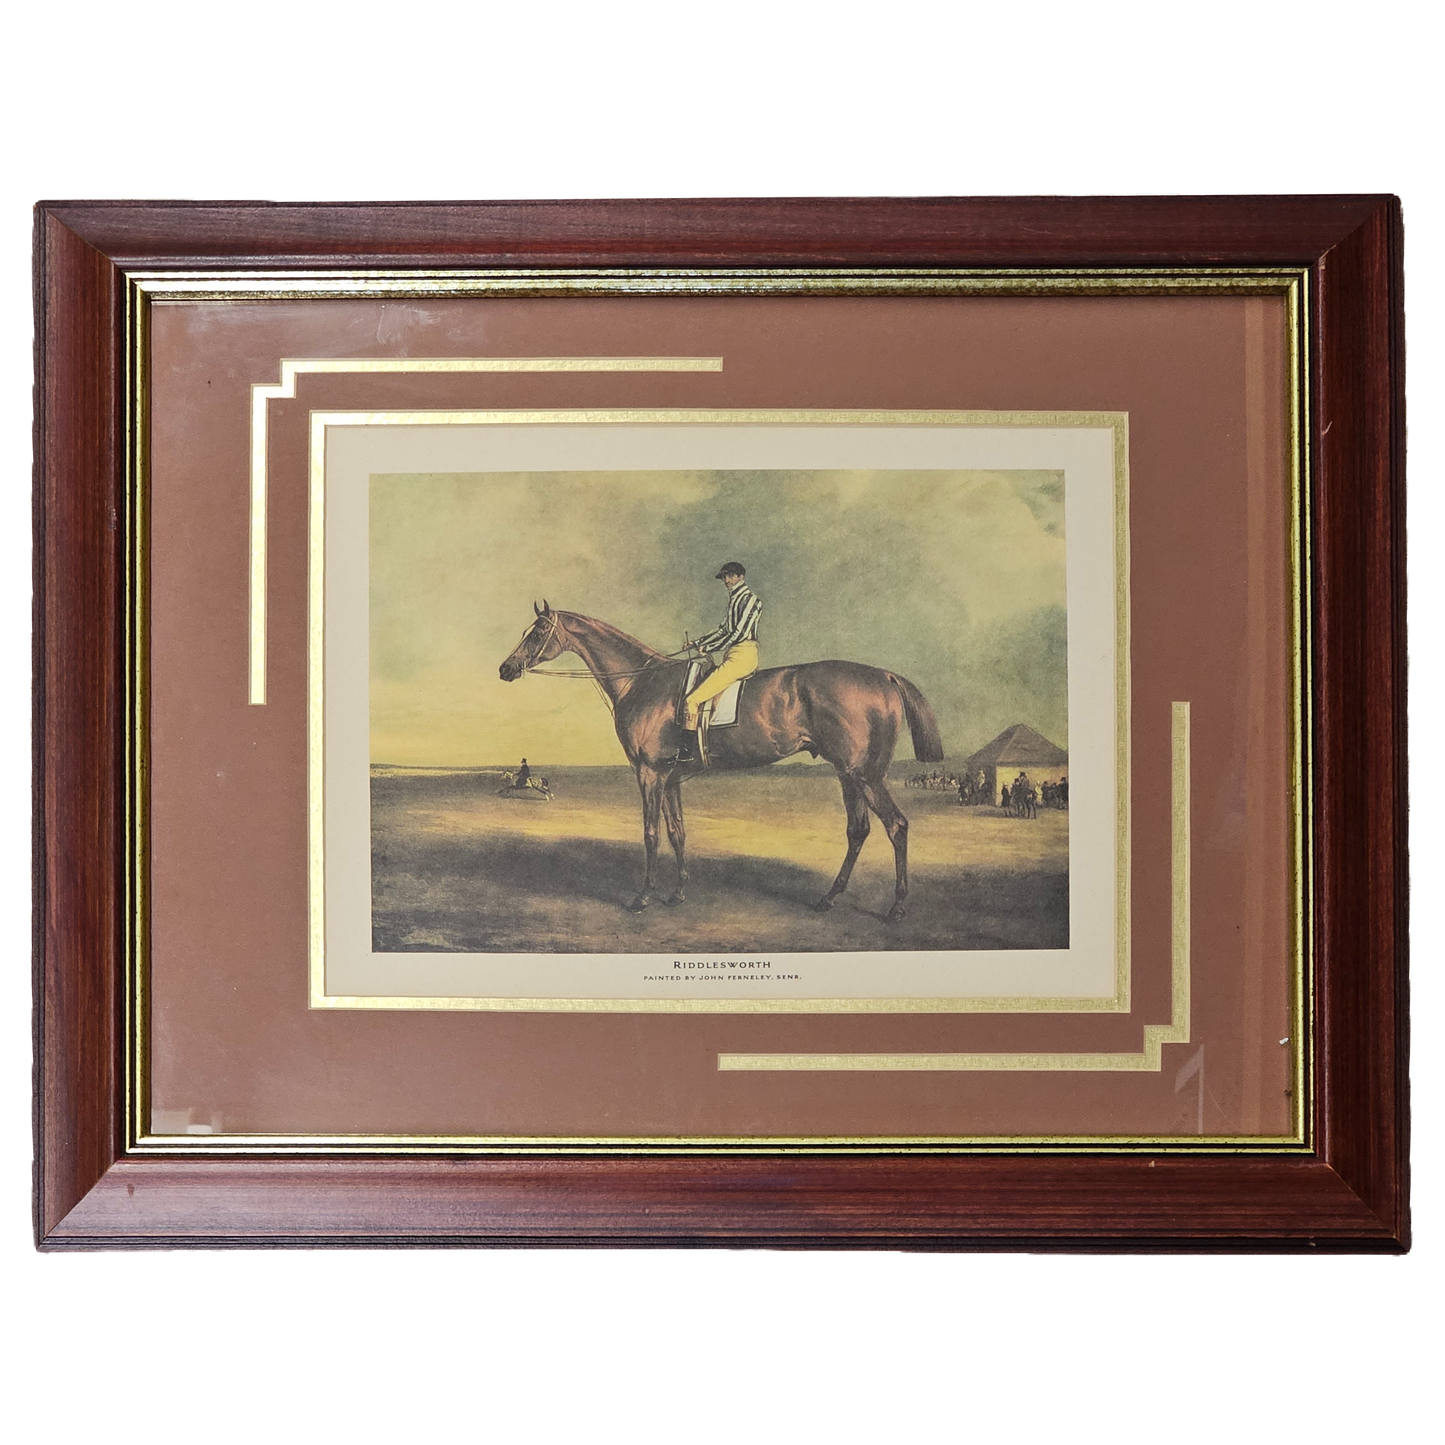 Vintage Horse Rider Equestrian Artwork "Riddlesworth" by John Fernelley